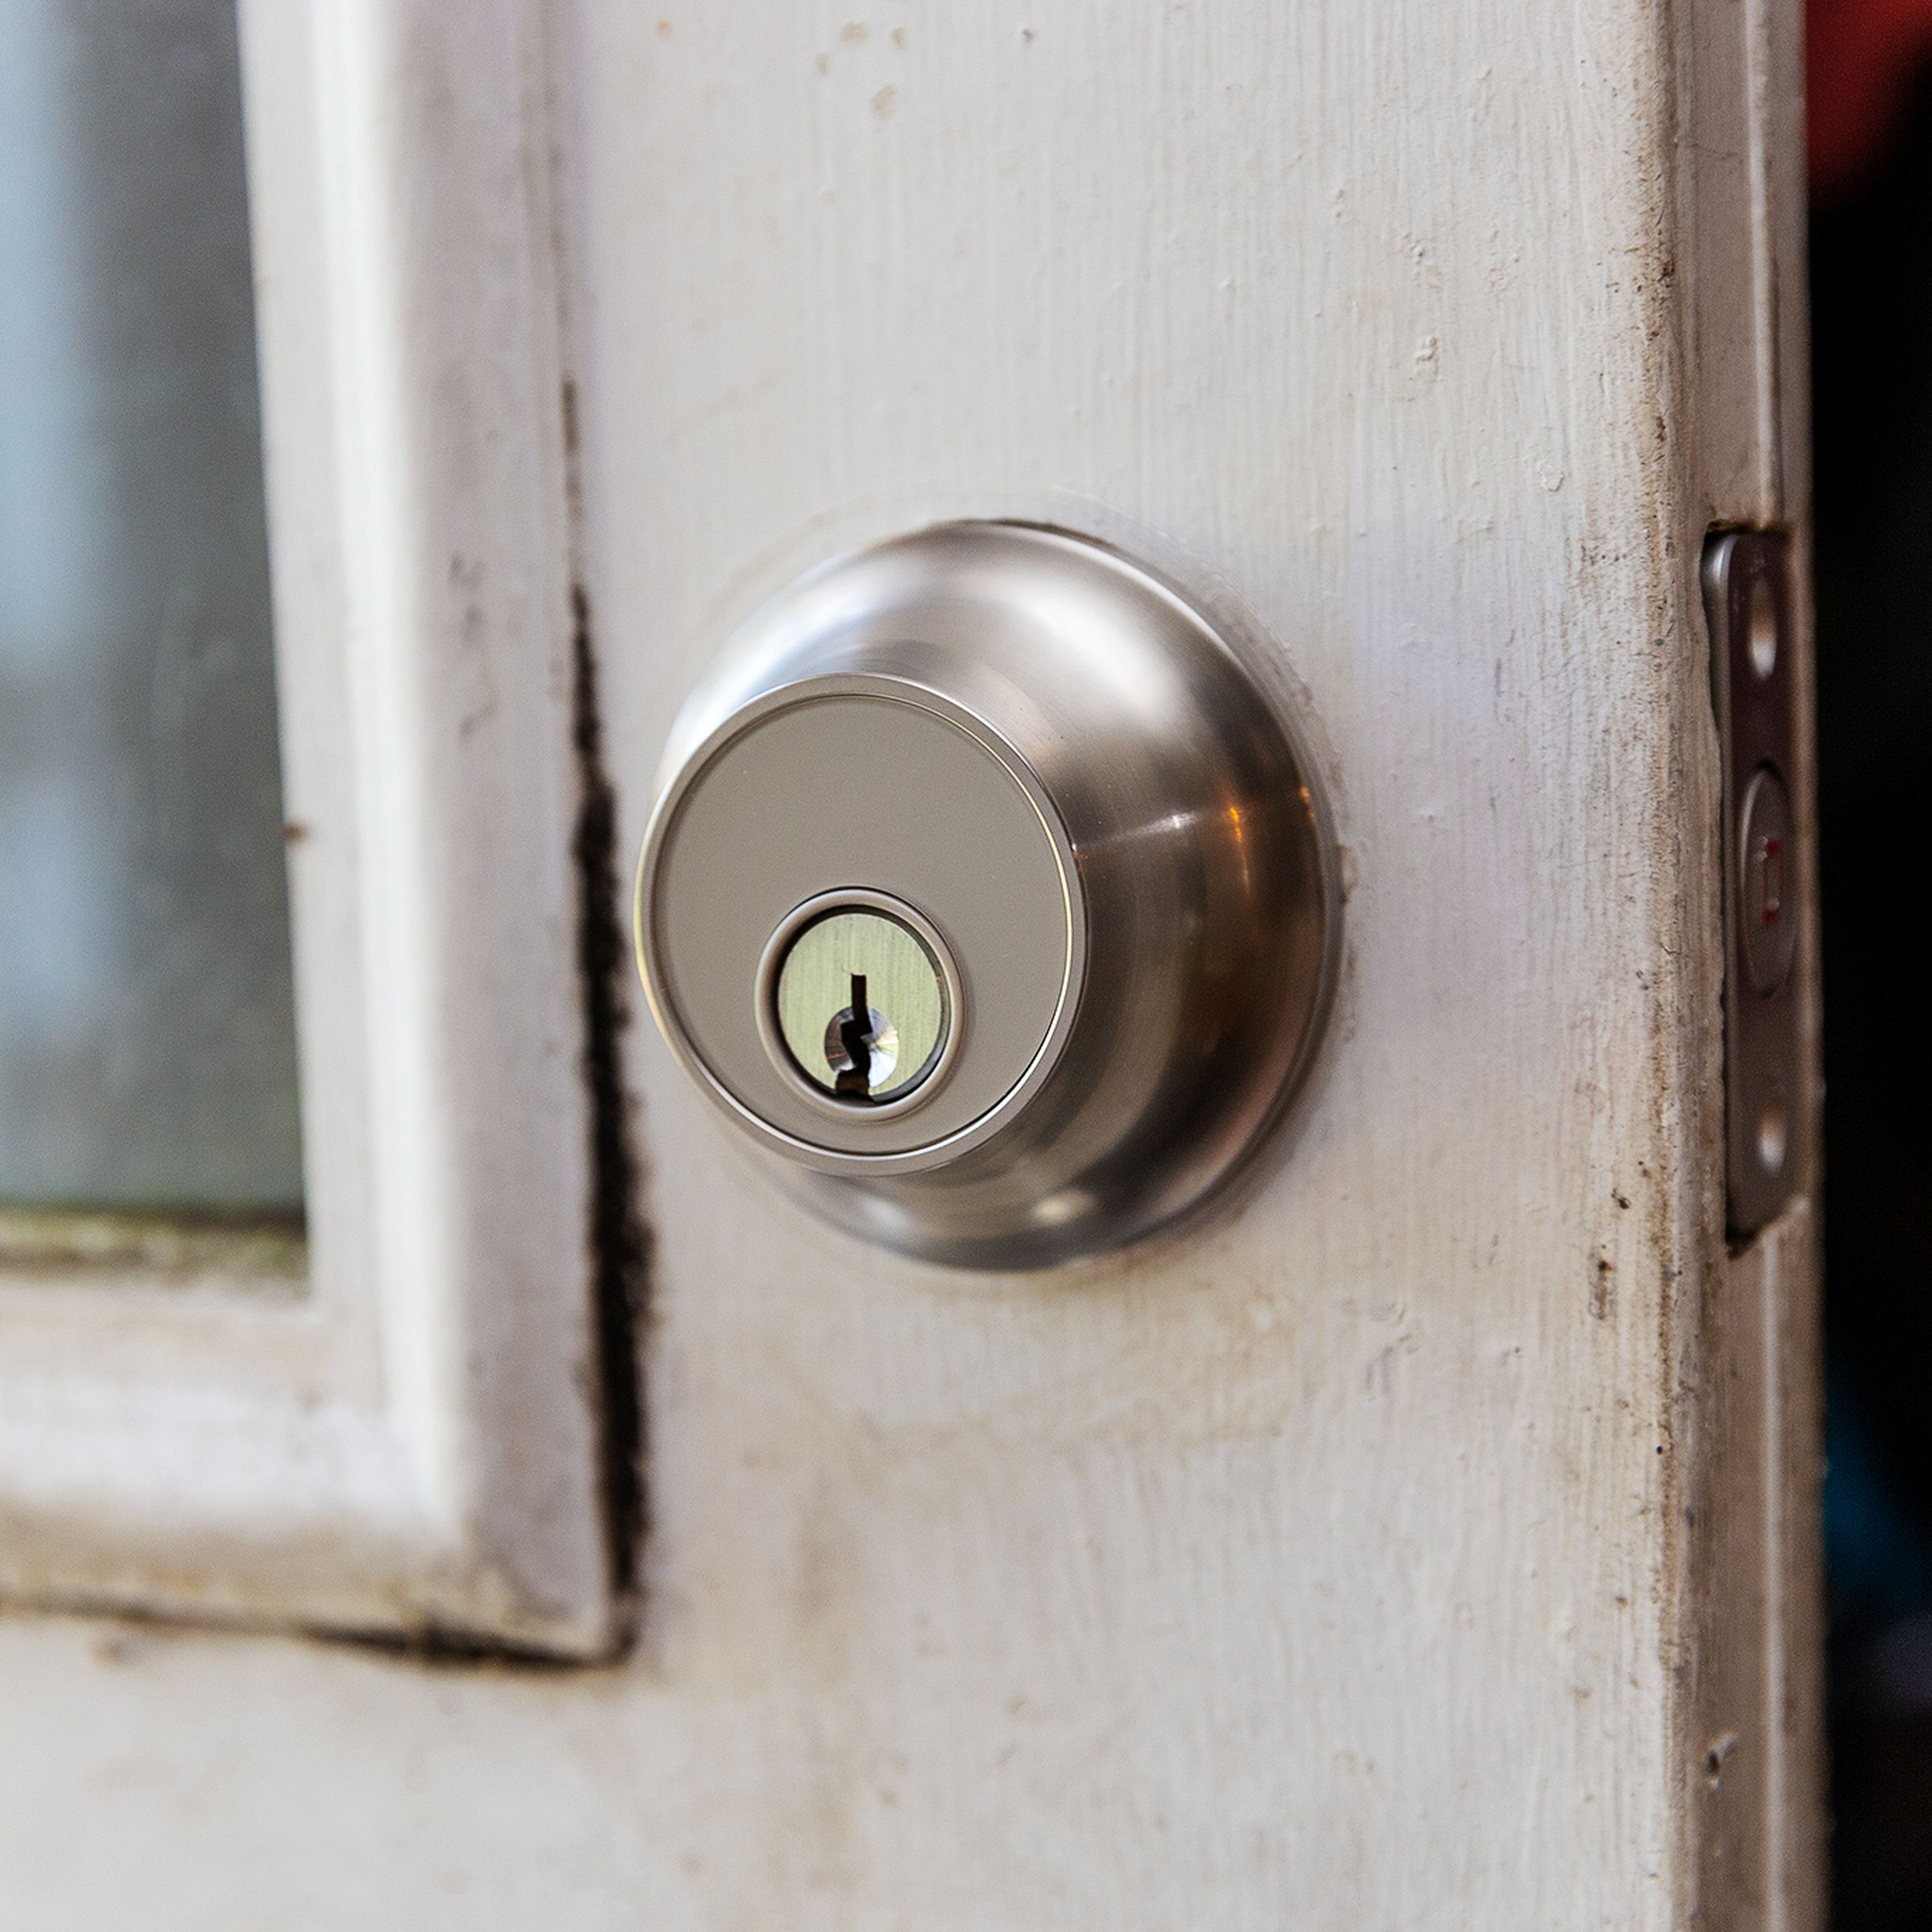 A keyed door lock